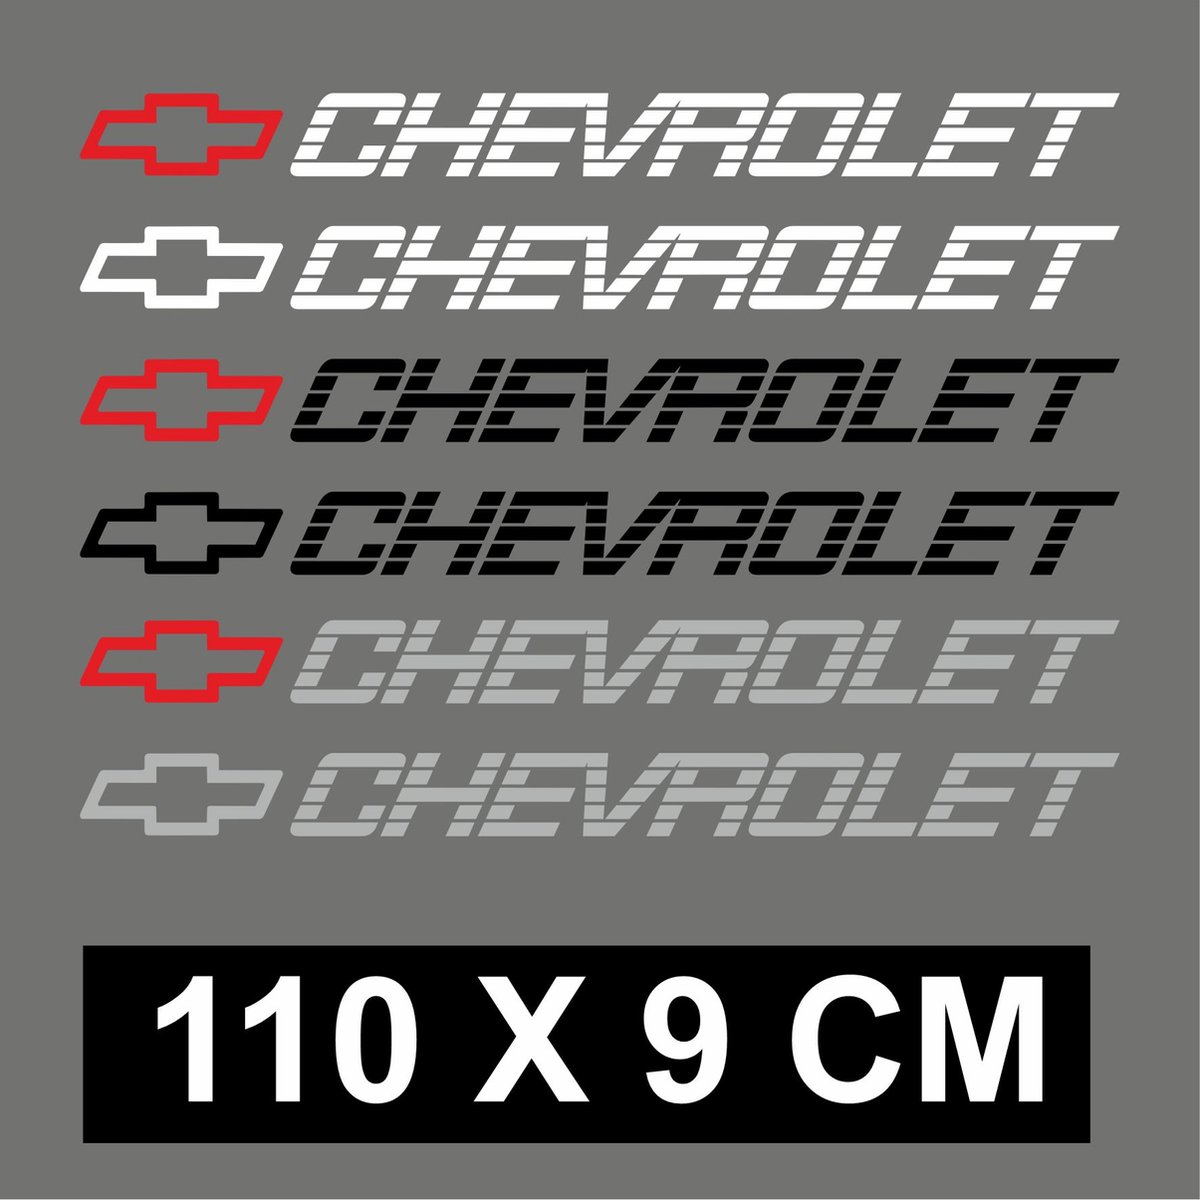 Chevrolet Pickup tailgate sticker met chevy logo 110x9cm - zwarte tekst en zwart logo